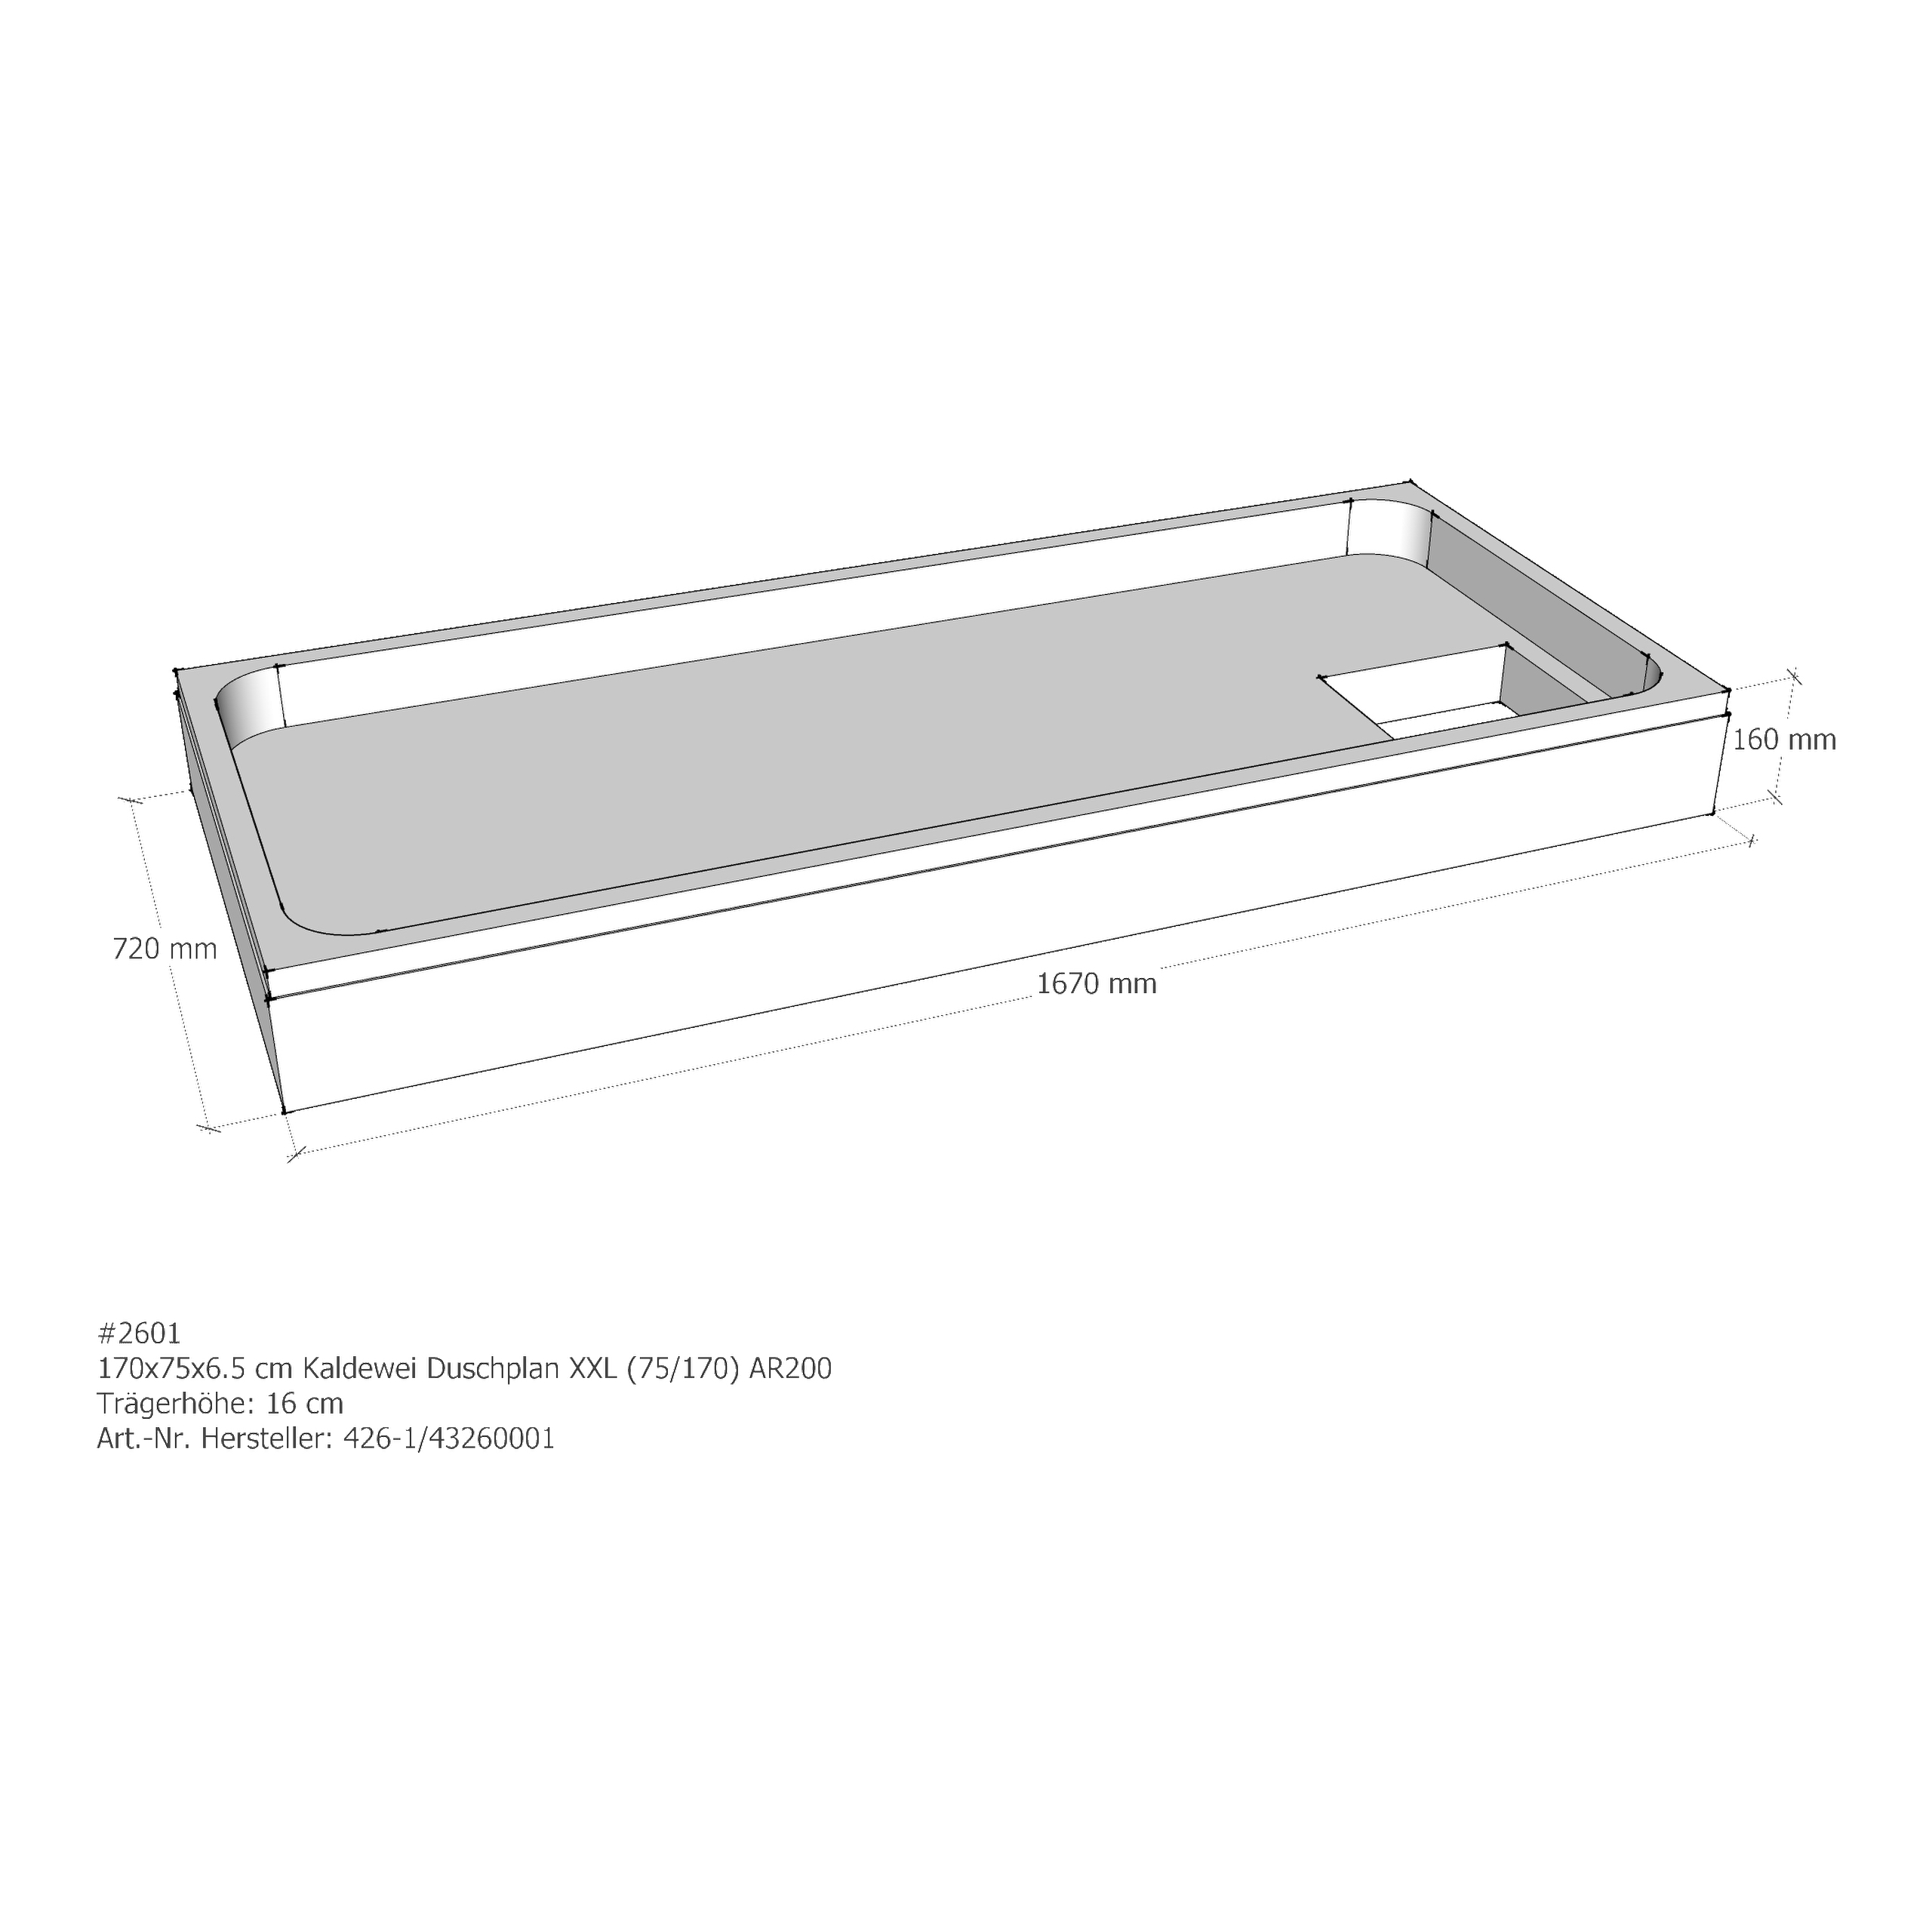 Duschwannenträger für Kaldewei Duschplan XXL 170 × 75 × 6,5 cm